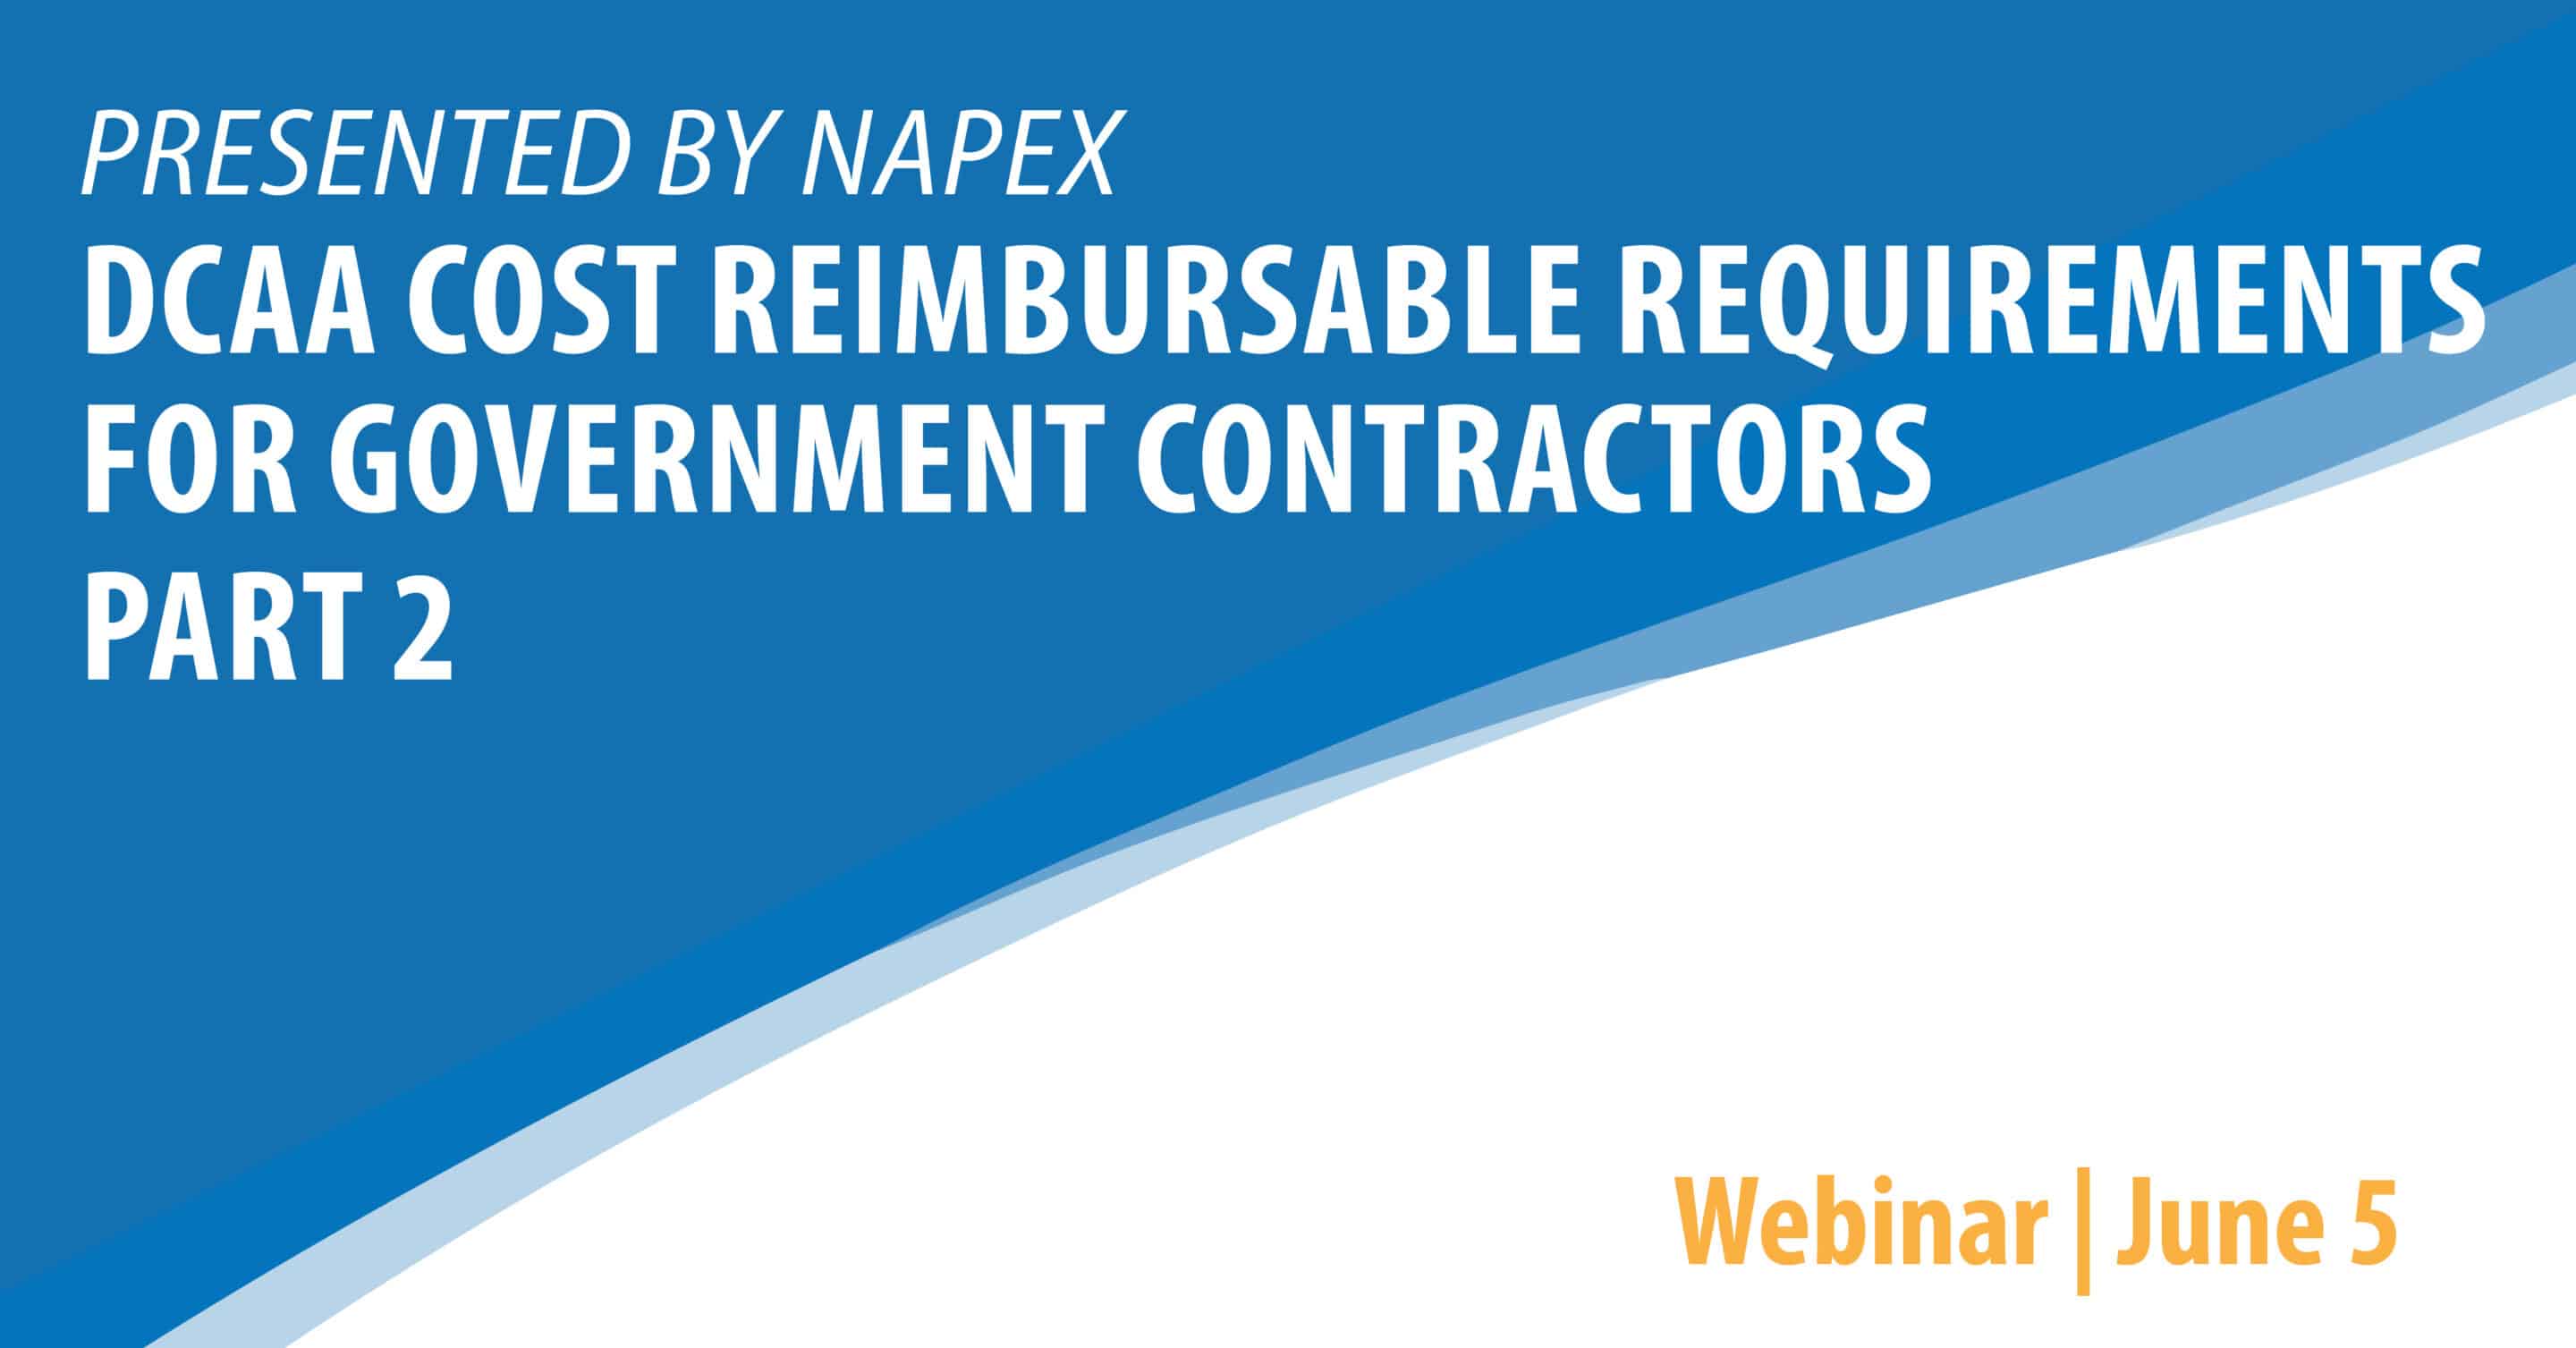 DCAA Cost Reimbursable Requirements for Government Contractors - Part 2